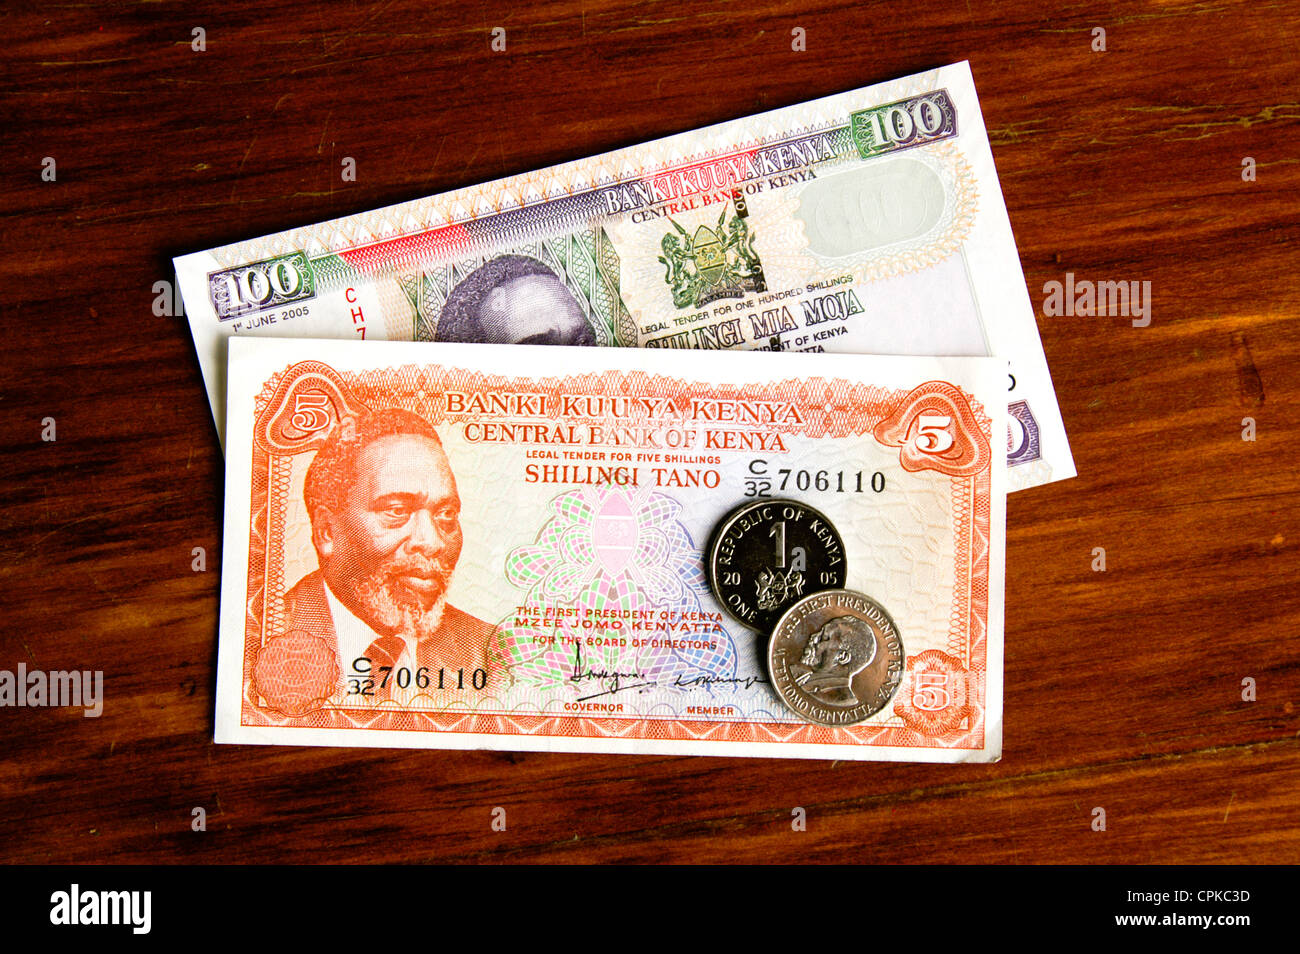 How much is 900 saudi riyal to kenyan shillings